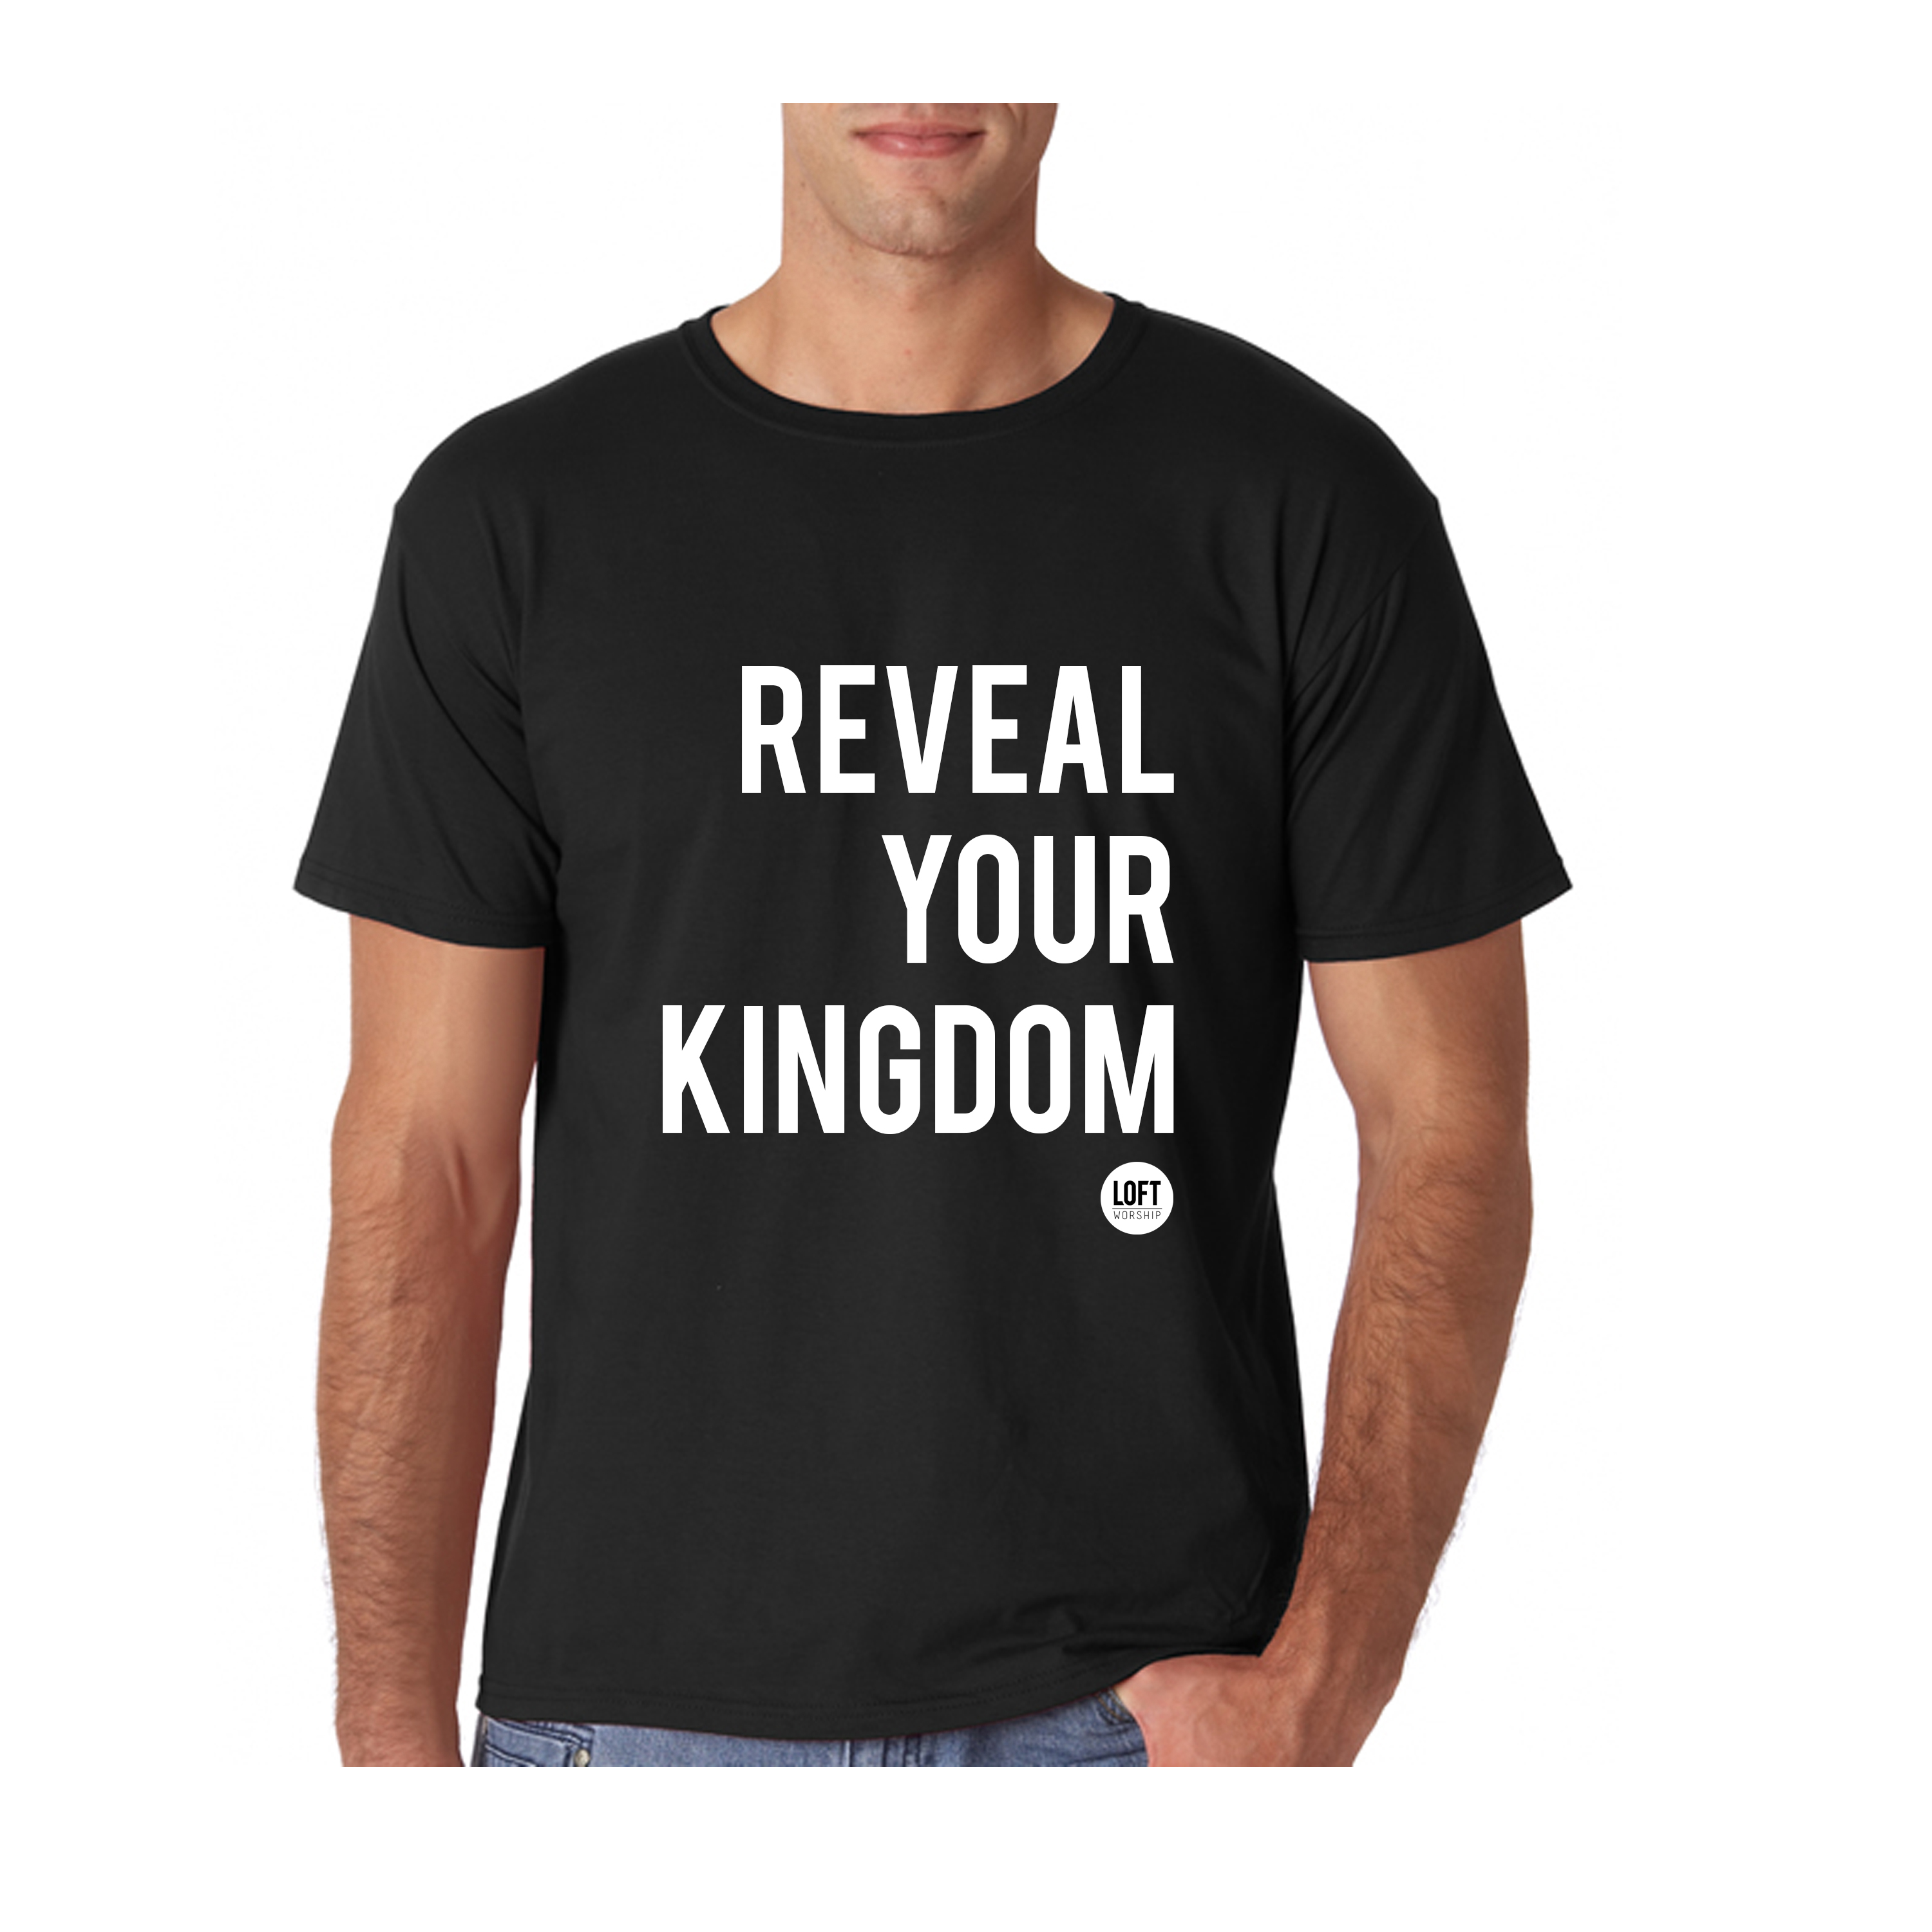 Reveal Your Kingdom shirt